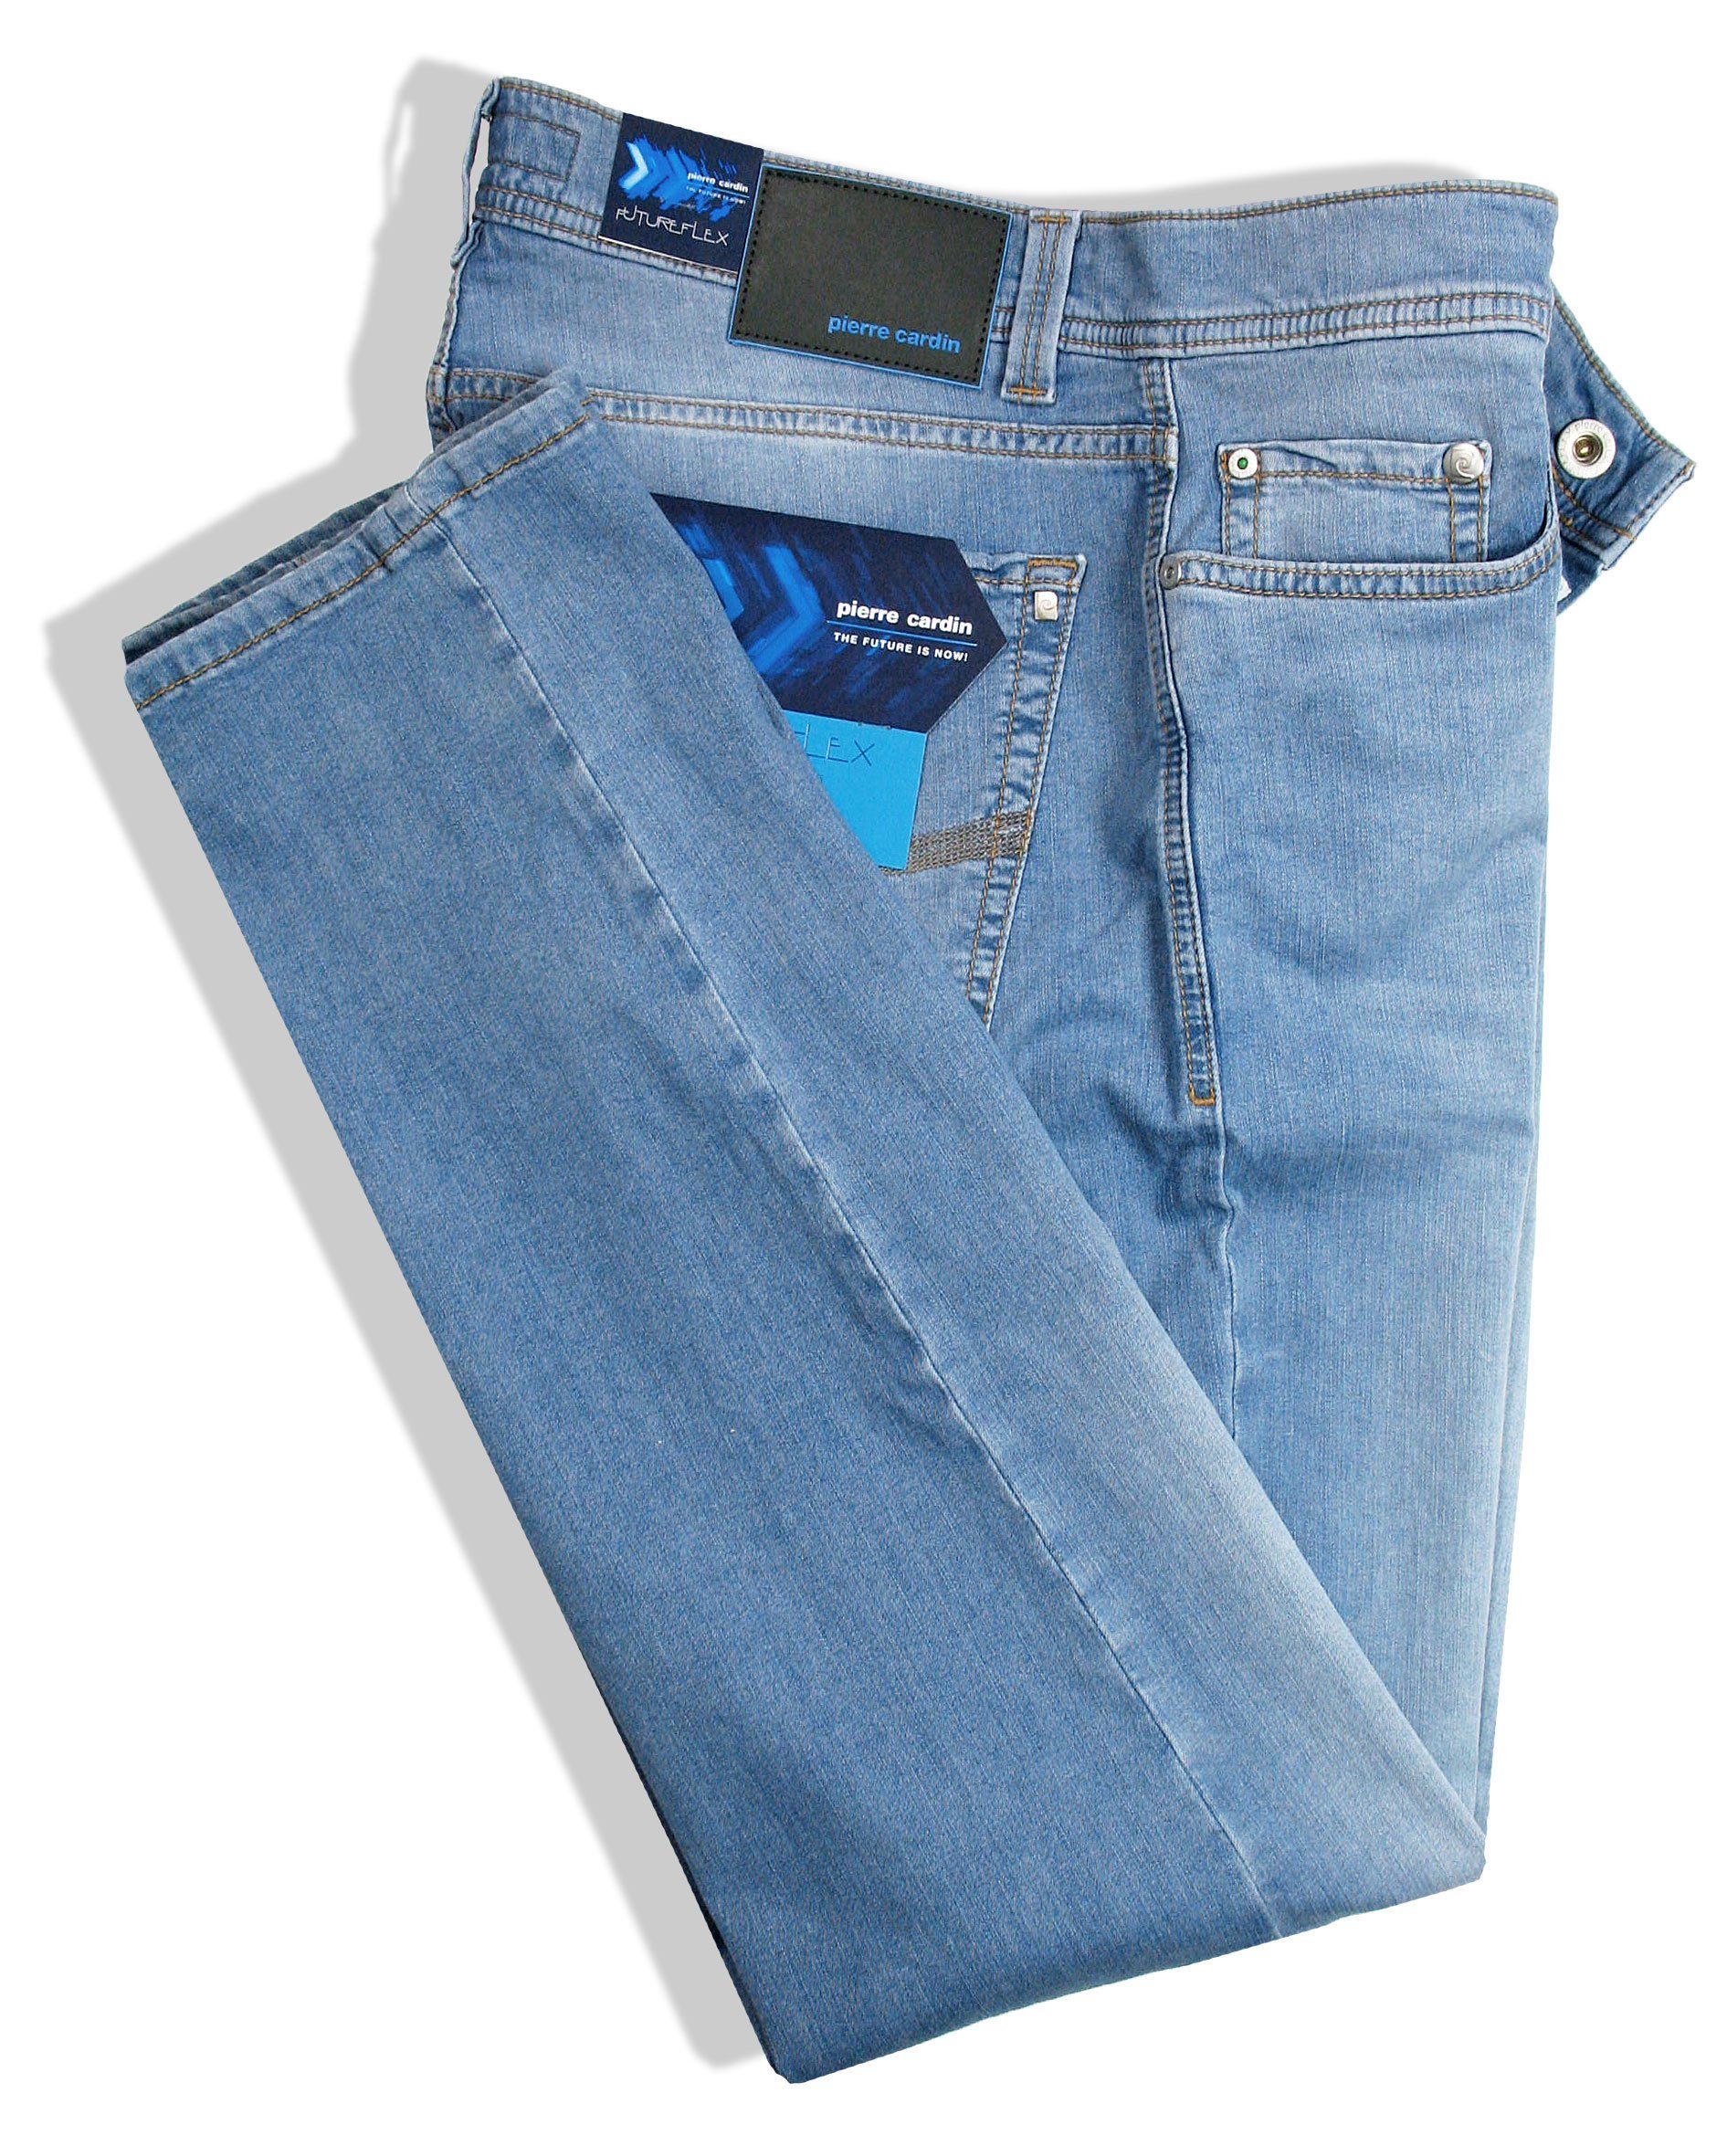 Pierre Cardin Lyon Futureflex Organic Jeans Cotton Fit 5-Pocket-Jeans Tapered Indigo Washed